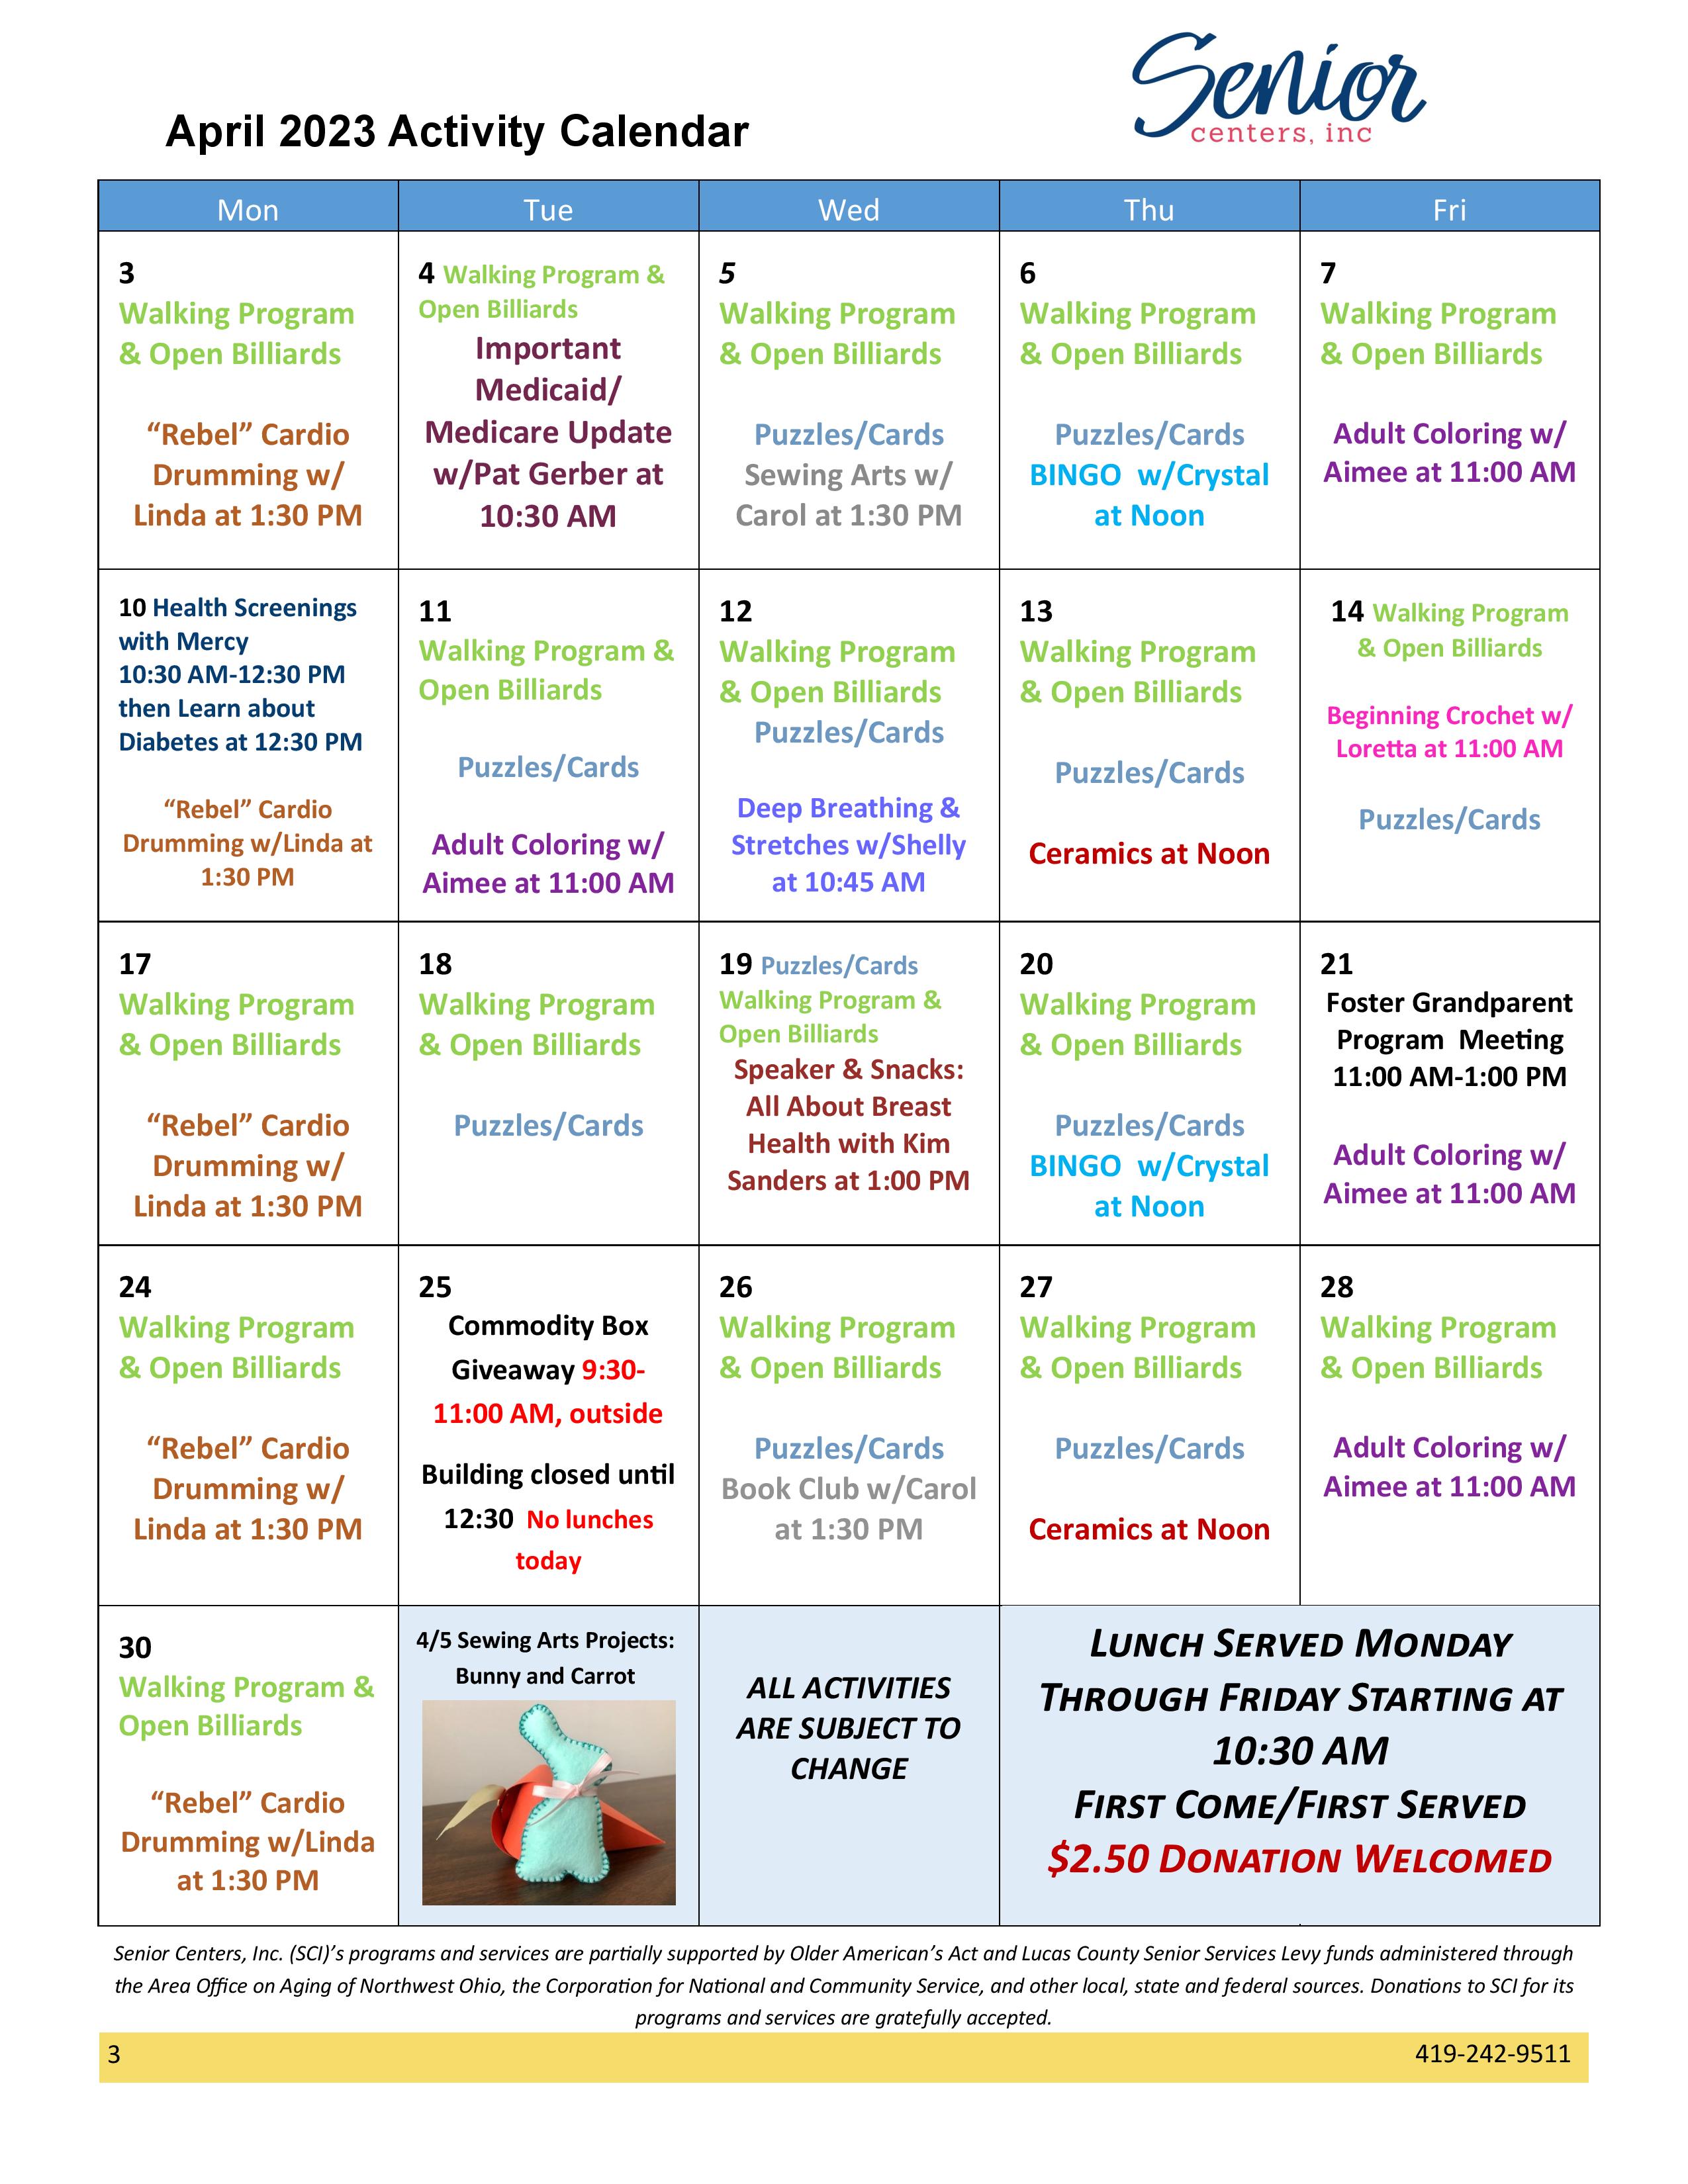 April 2023 Newsletter and Activity Calendar – Senior Centers, Inc.